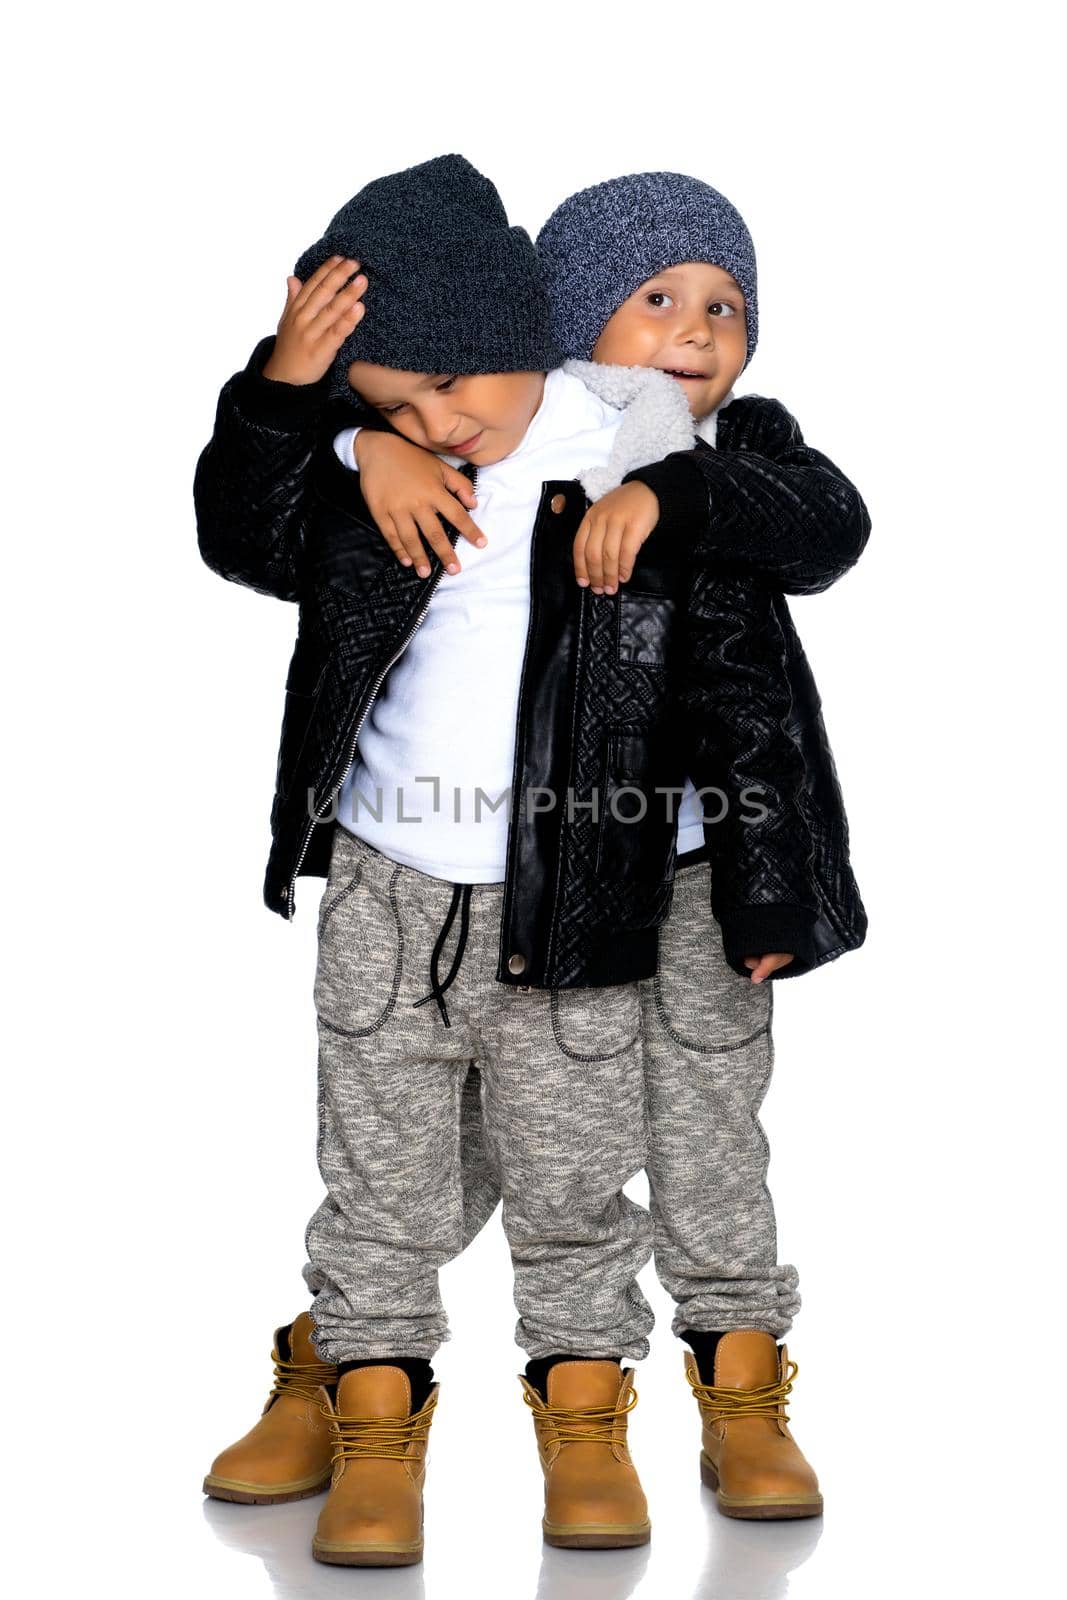 Two little boys in black jackets and hats. by kolesnikov_studio